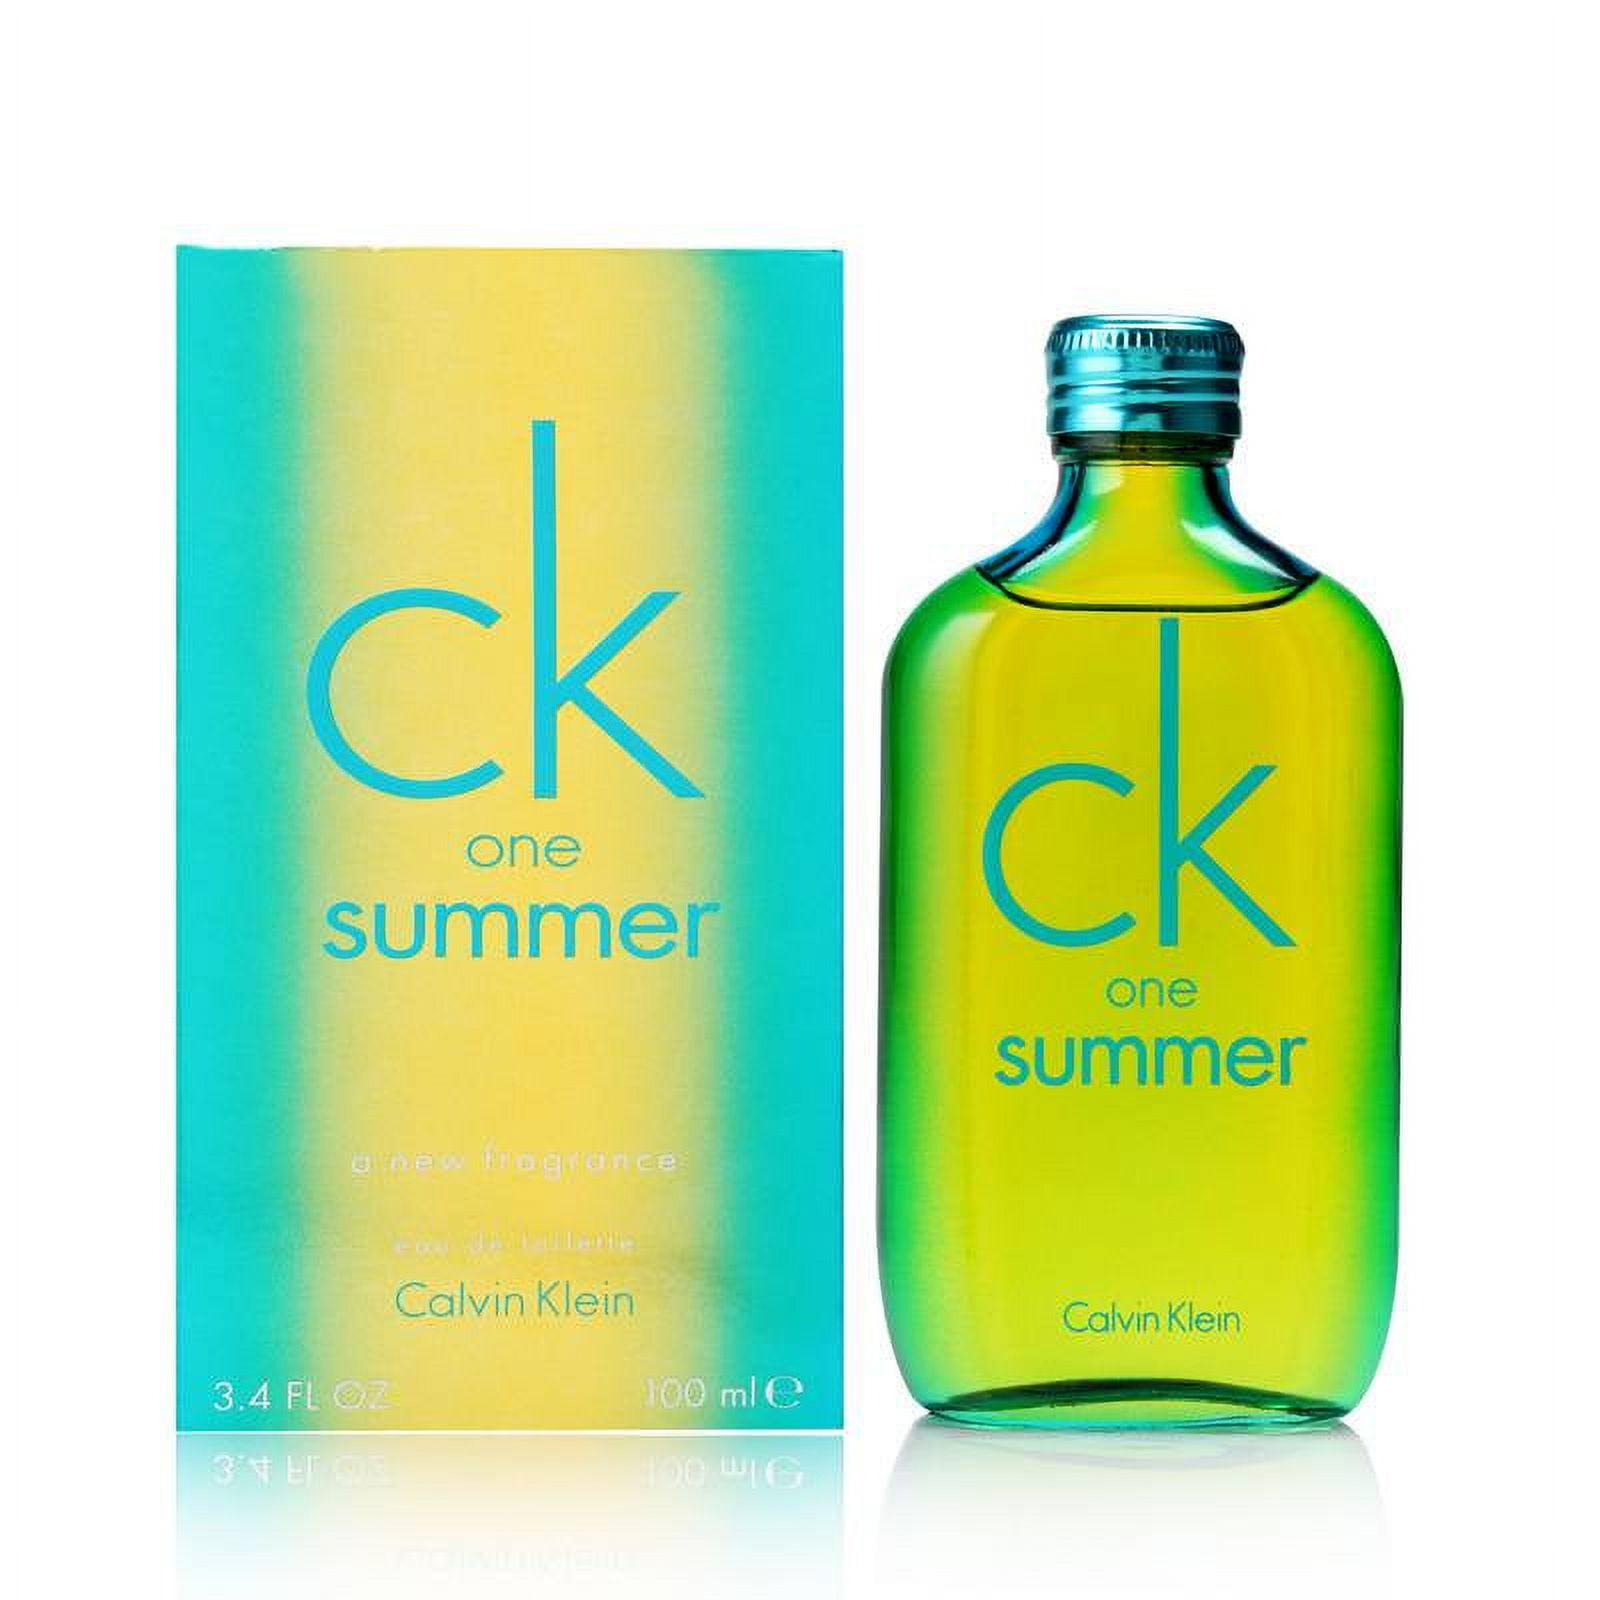 CK One Summer by Calvin Klein 3.4 oz Eau de Toilette Spray 2014 Limited ...